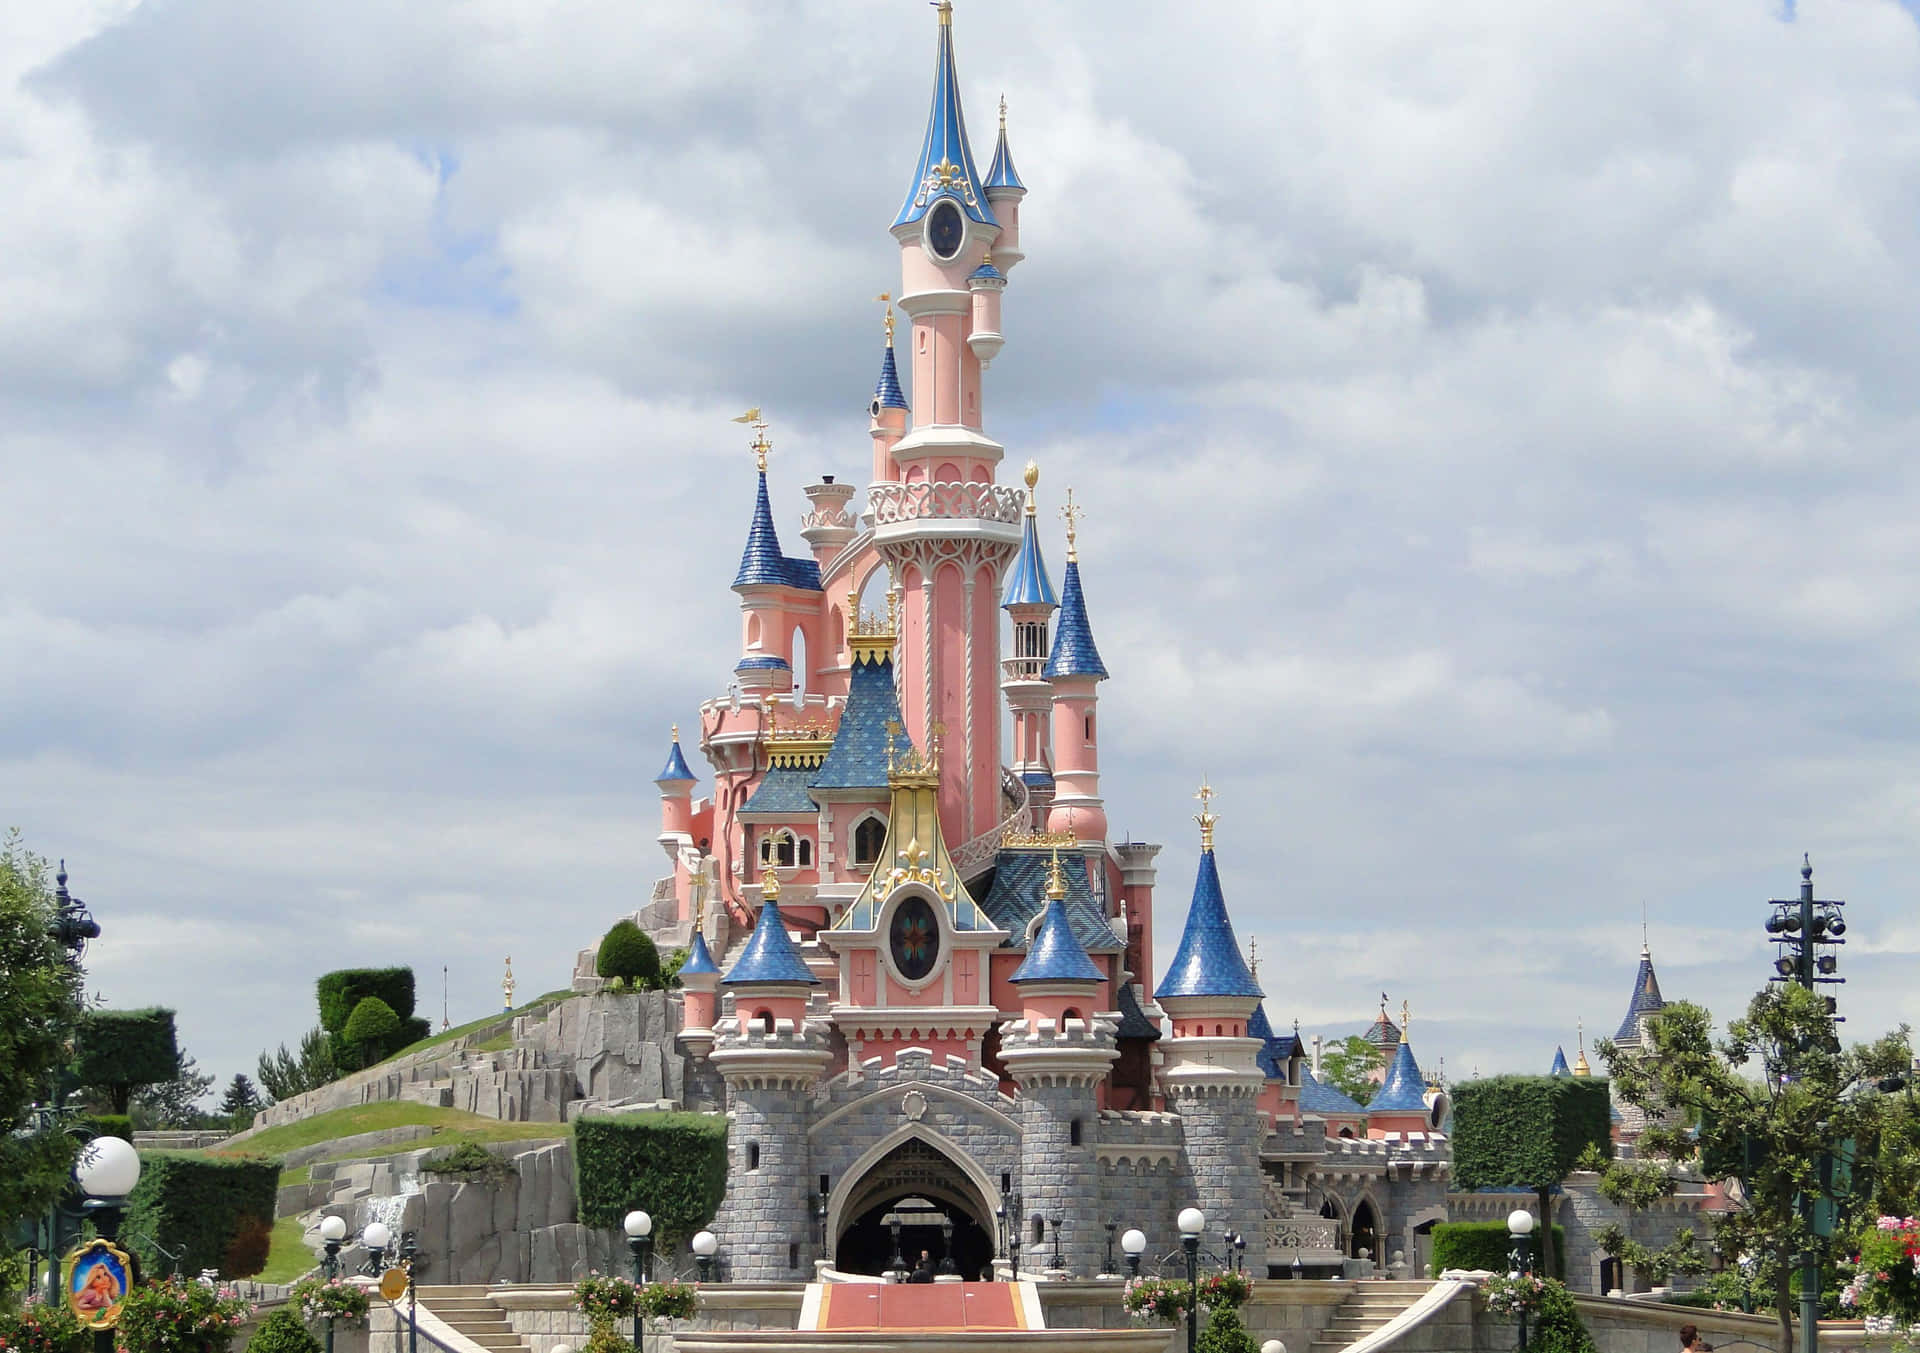 Disney Dreams! Spectacular Night Time Full Show - HD at Disneyland Paris  w/Peter Pan, Rapunzel 